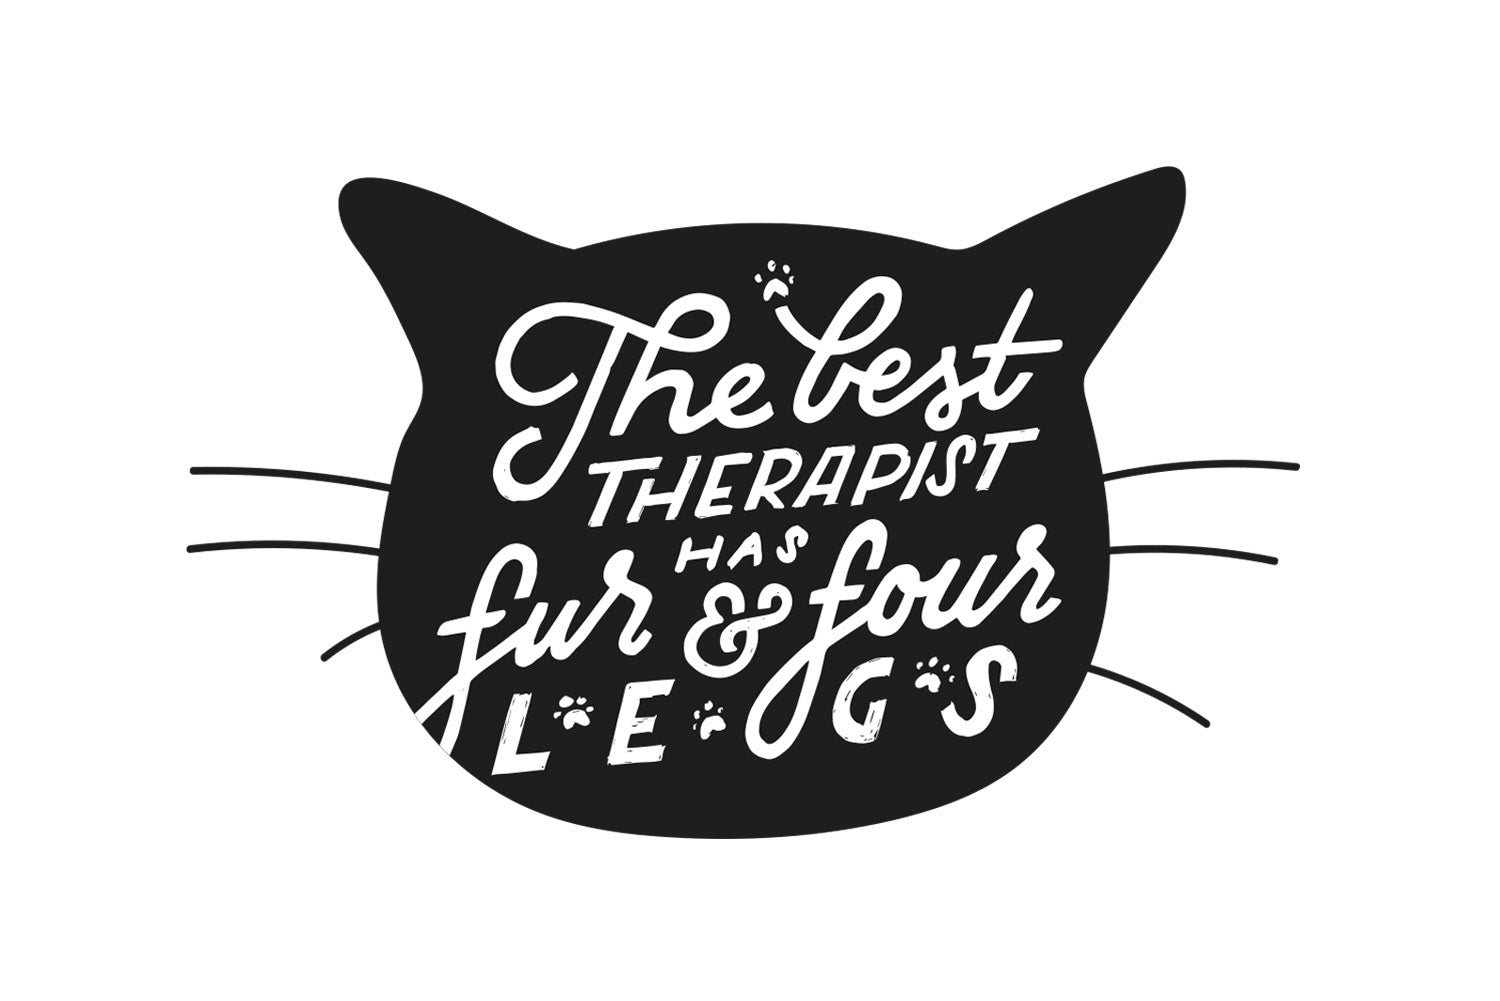 Furry therapist